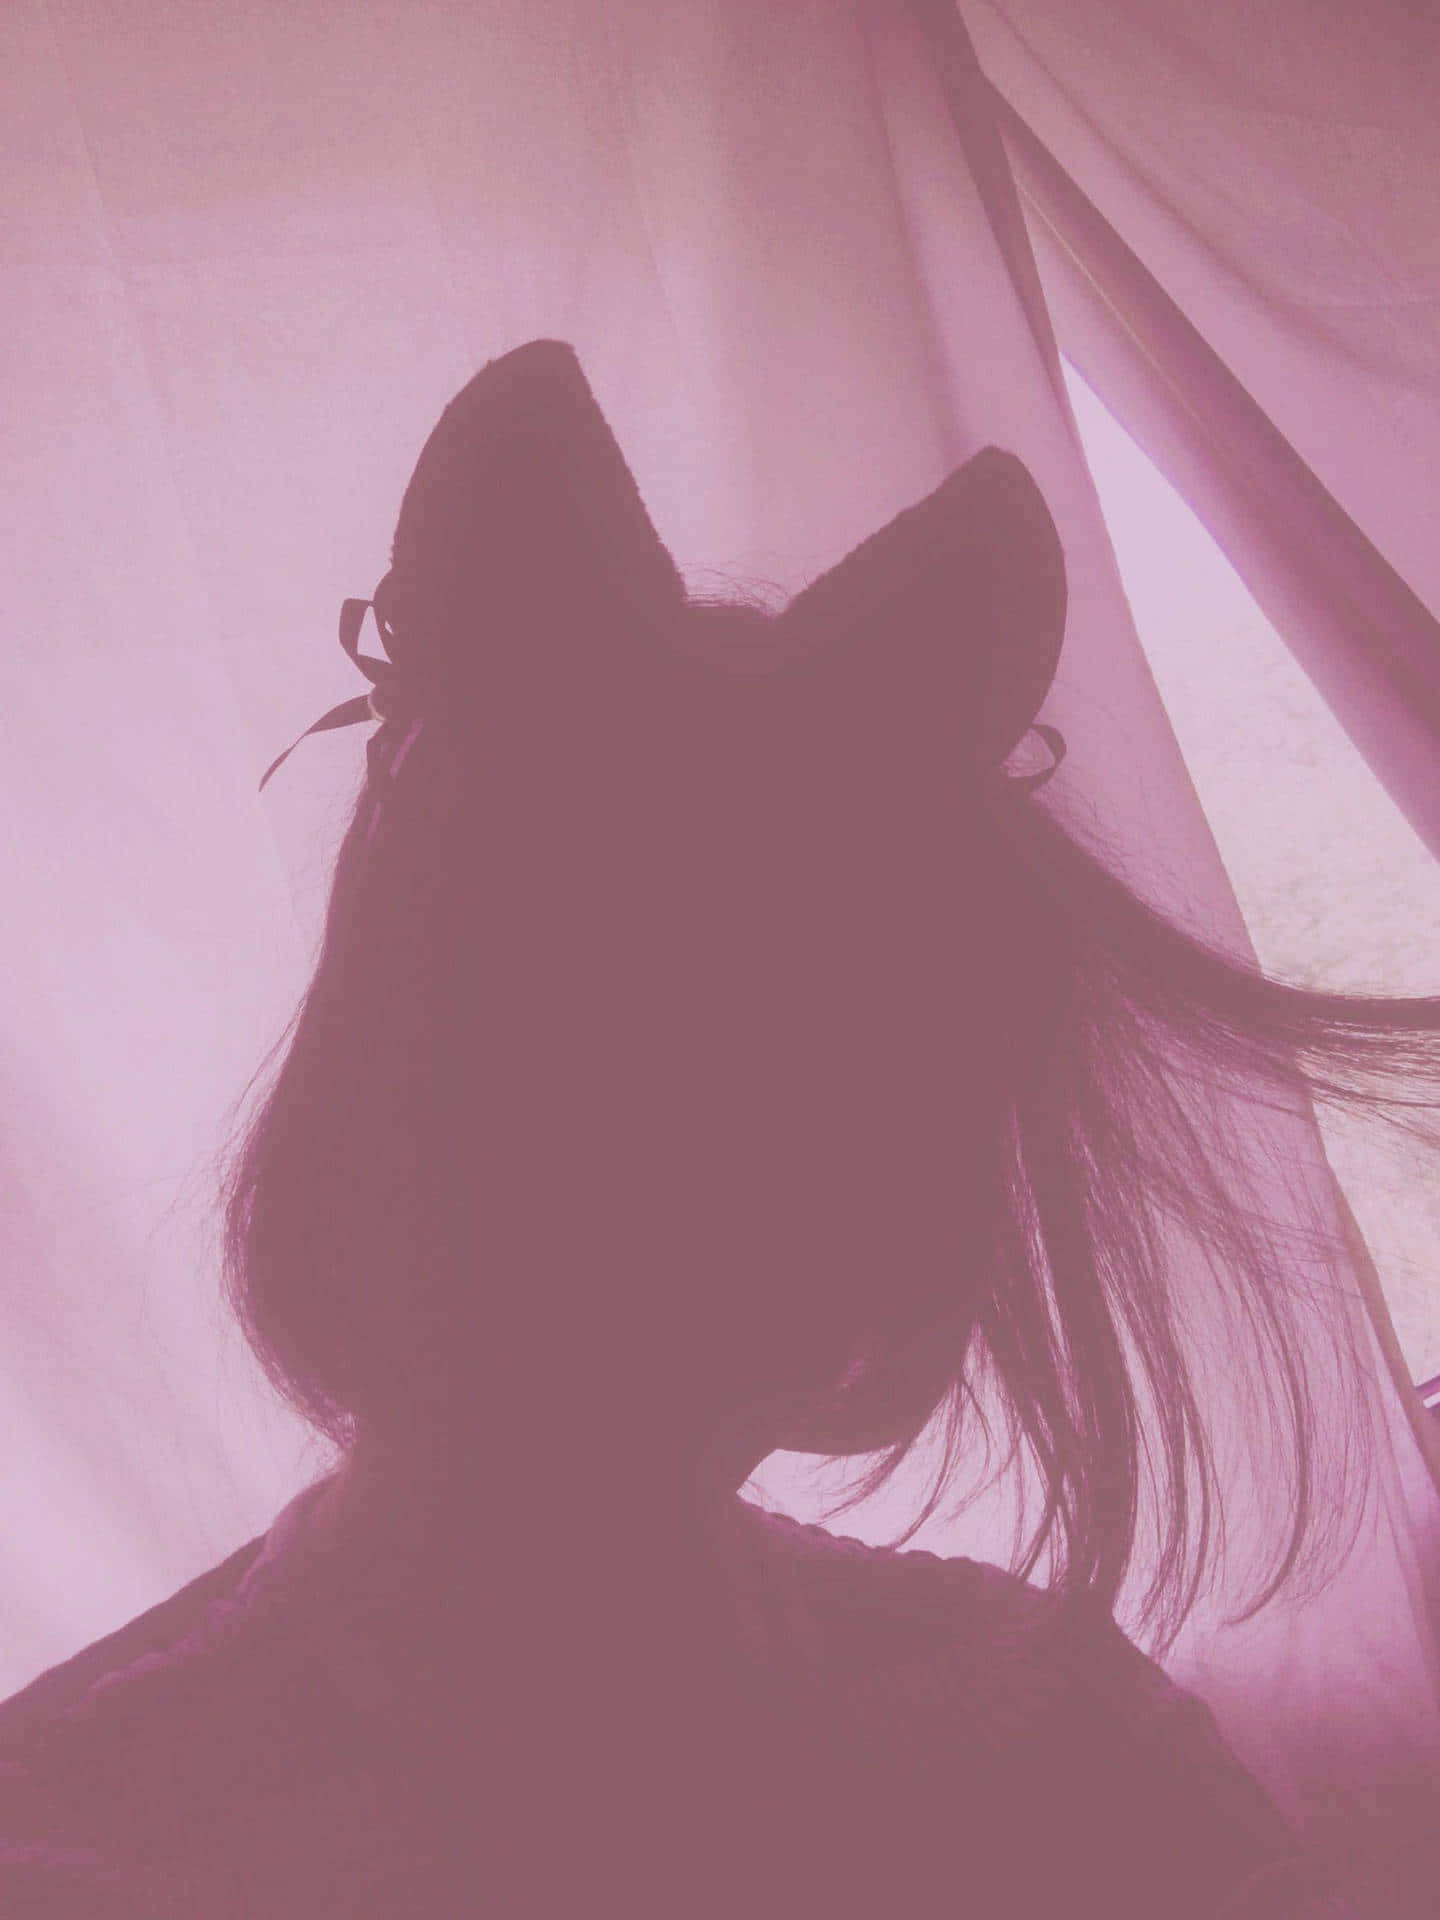 Silhouettewith Cat Ears Aesthetic.jpg Wallpaper